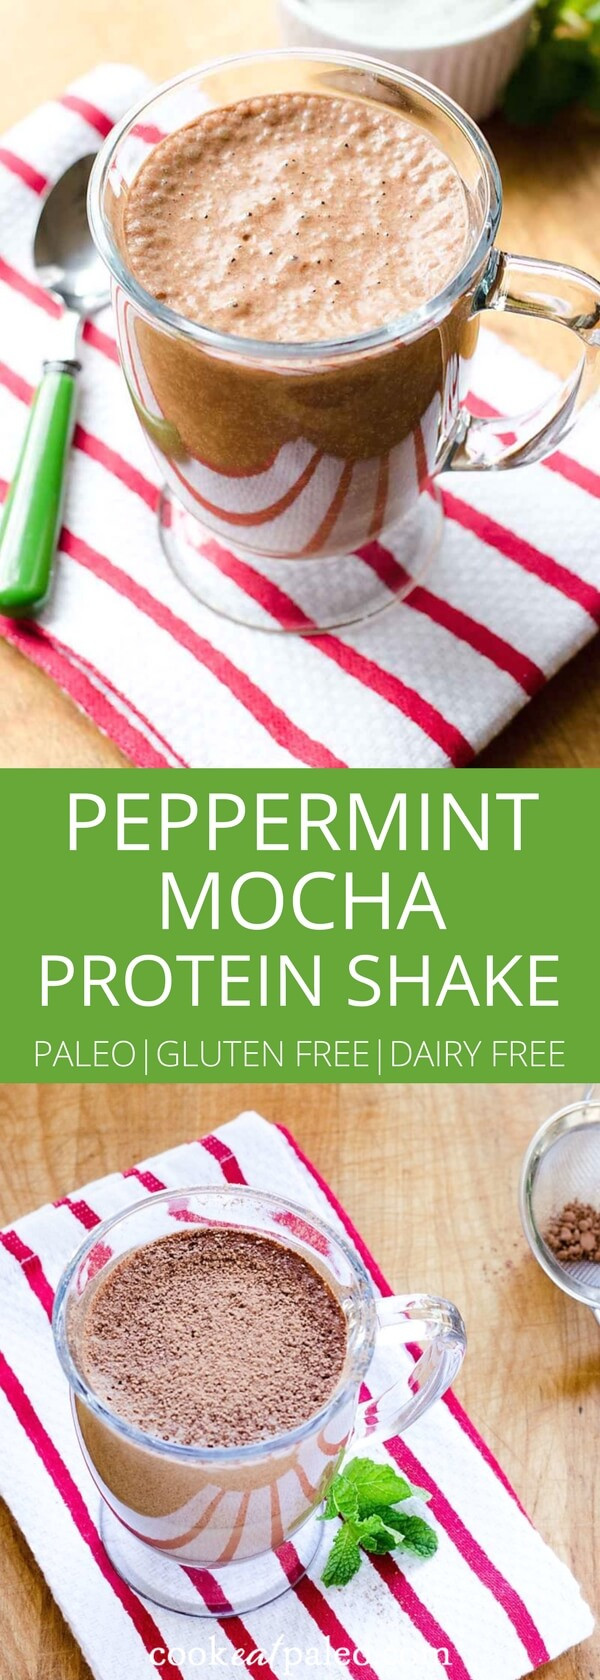 Dairy Free Protein Shake Recipes
 Peppermint Mocha Protein Shake